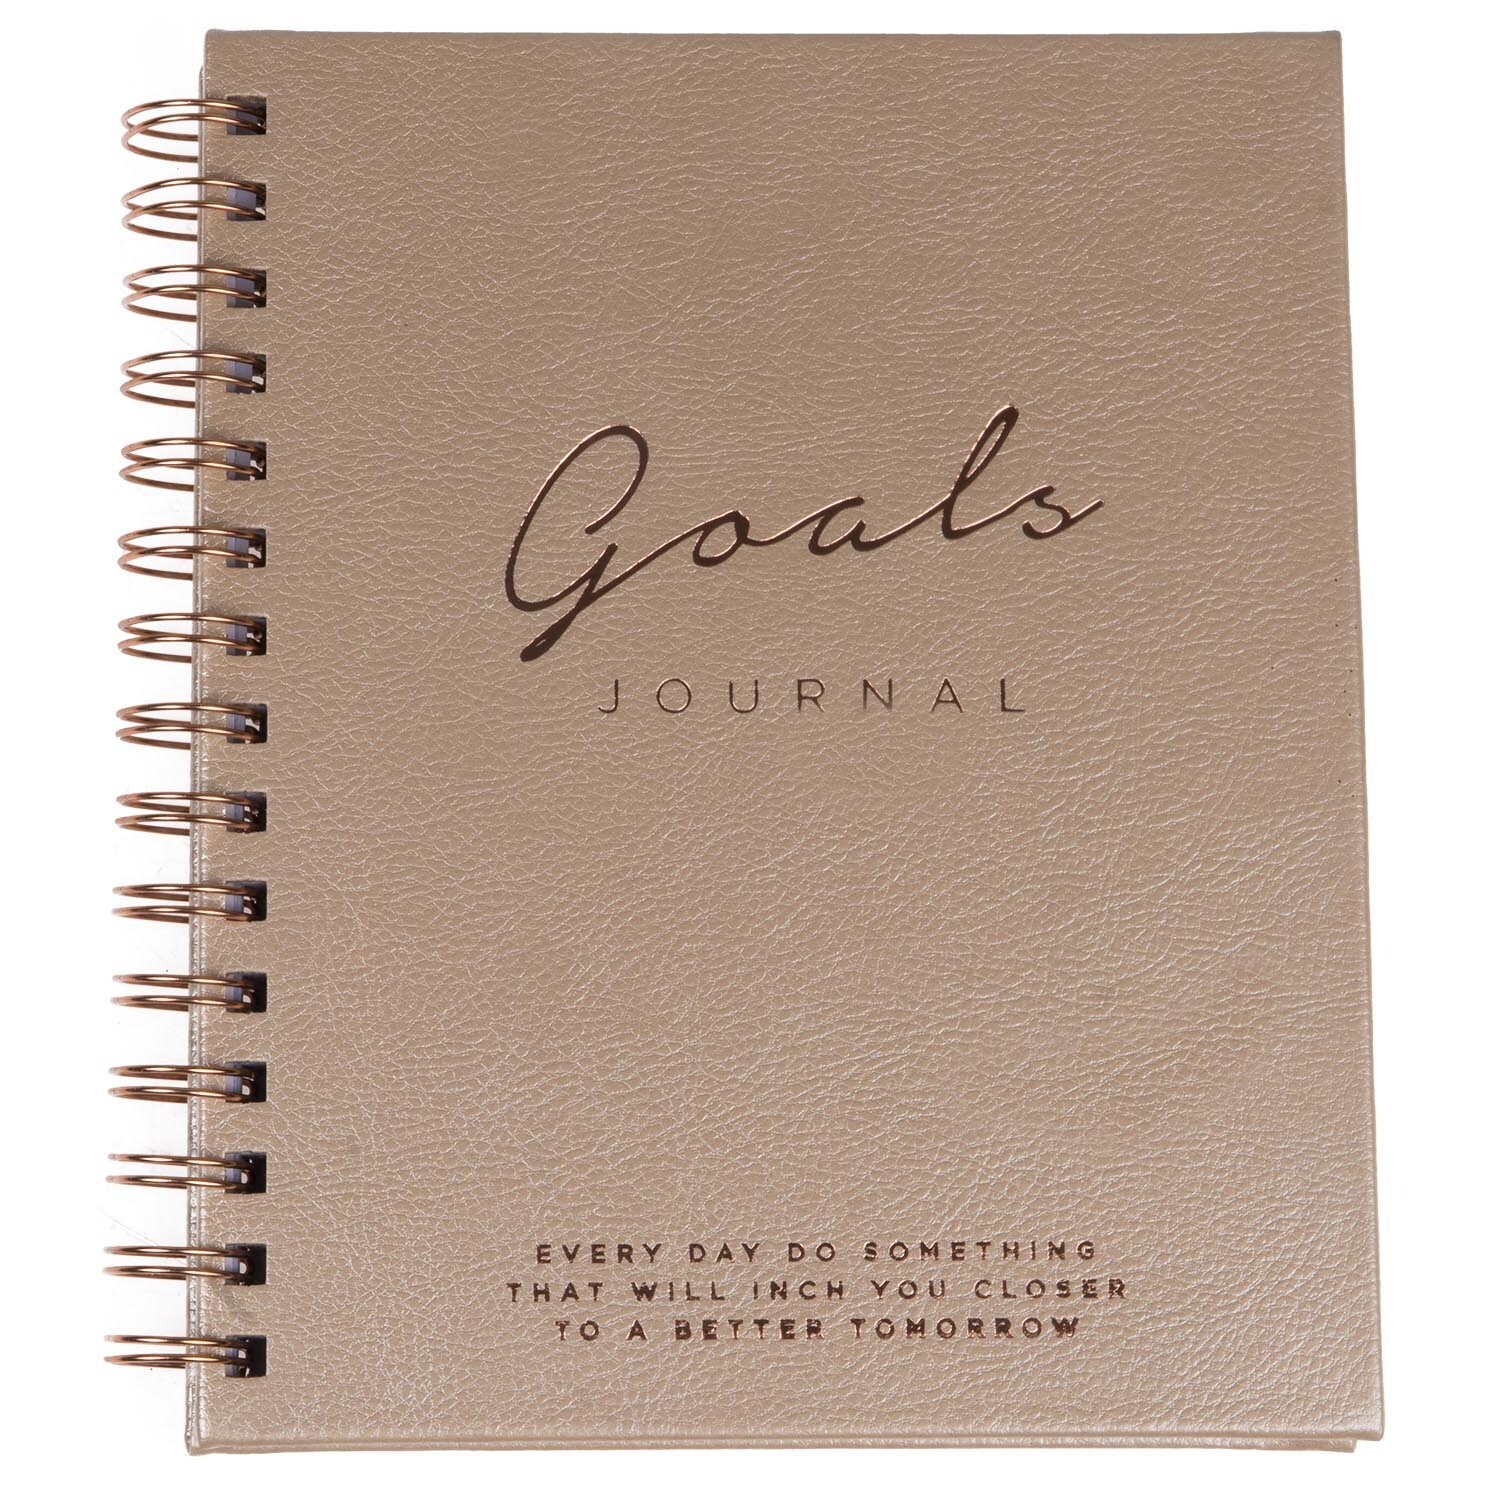 Goals Journal Image